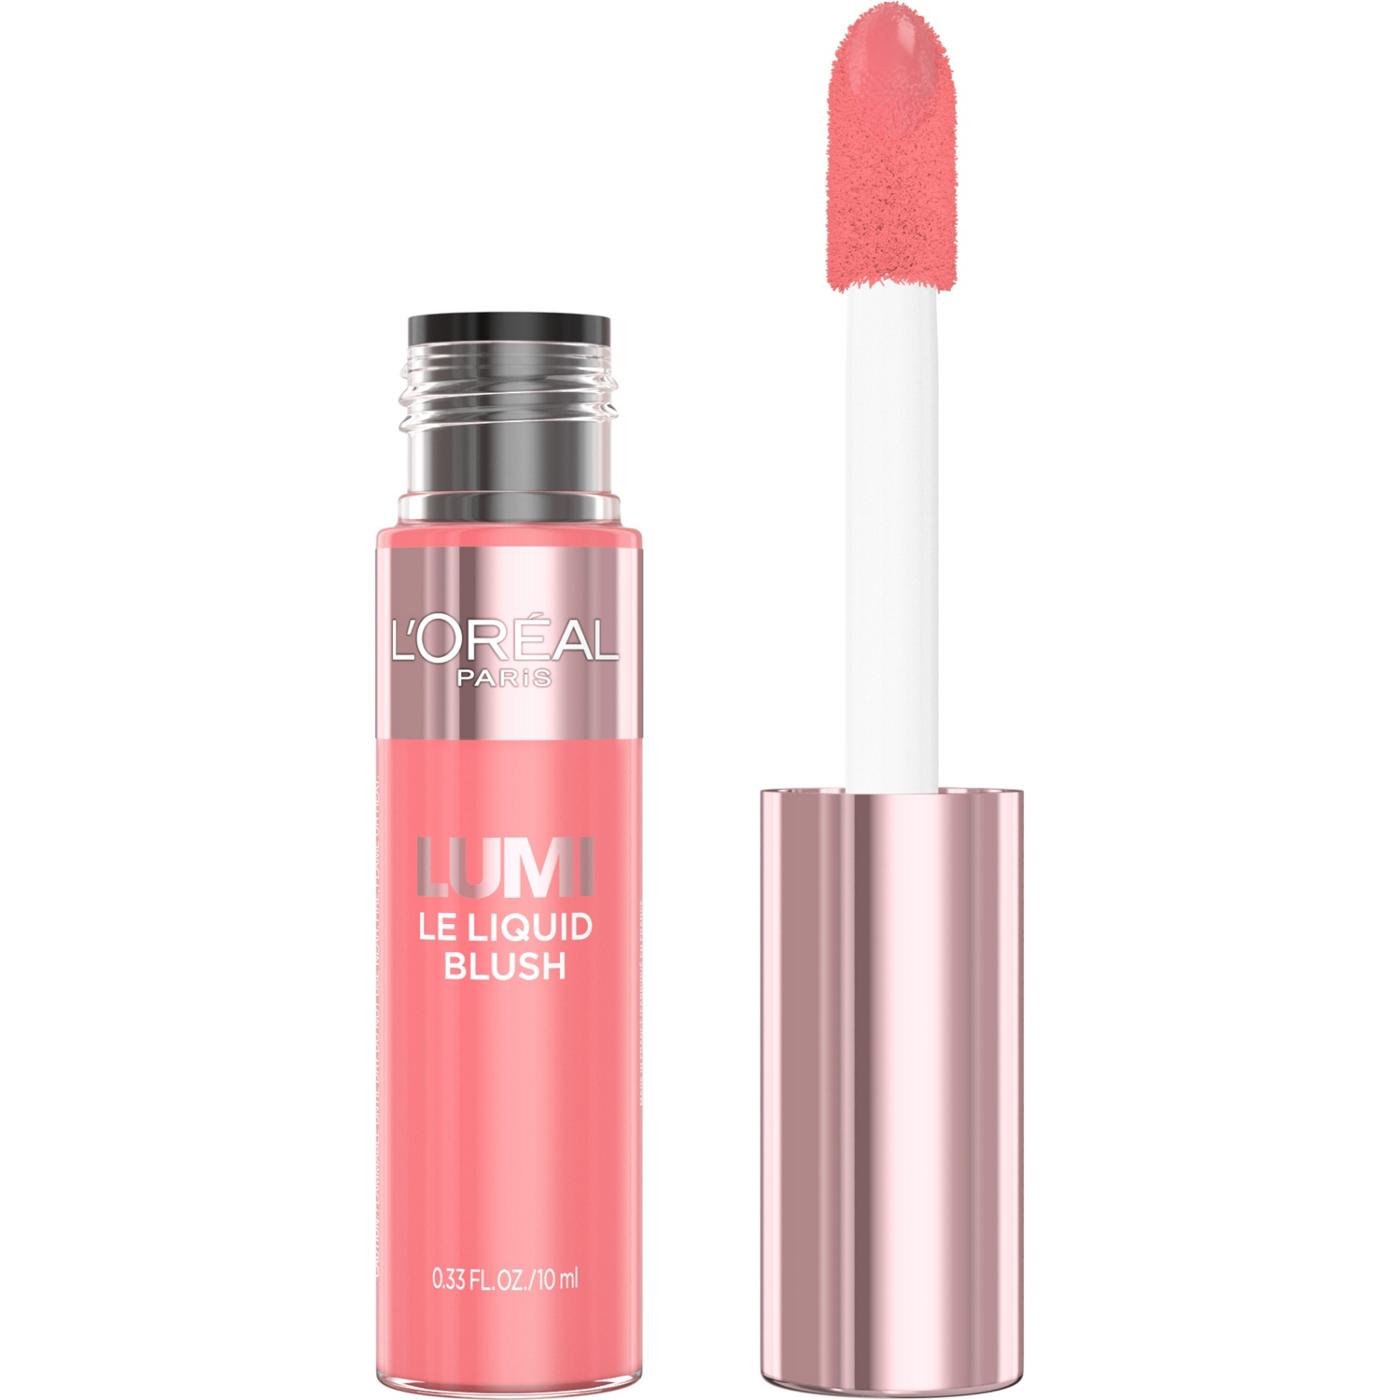 L'Oréal Paris True Match Lumi Liquid Blush - Dewy Bright Pink; image 1 of 8